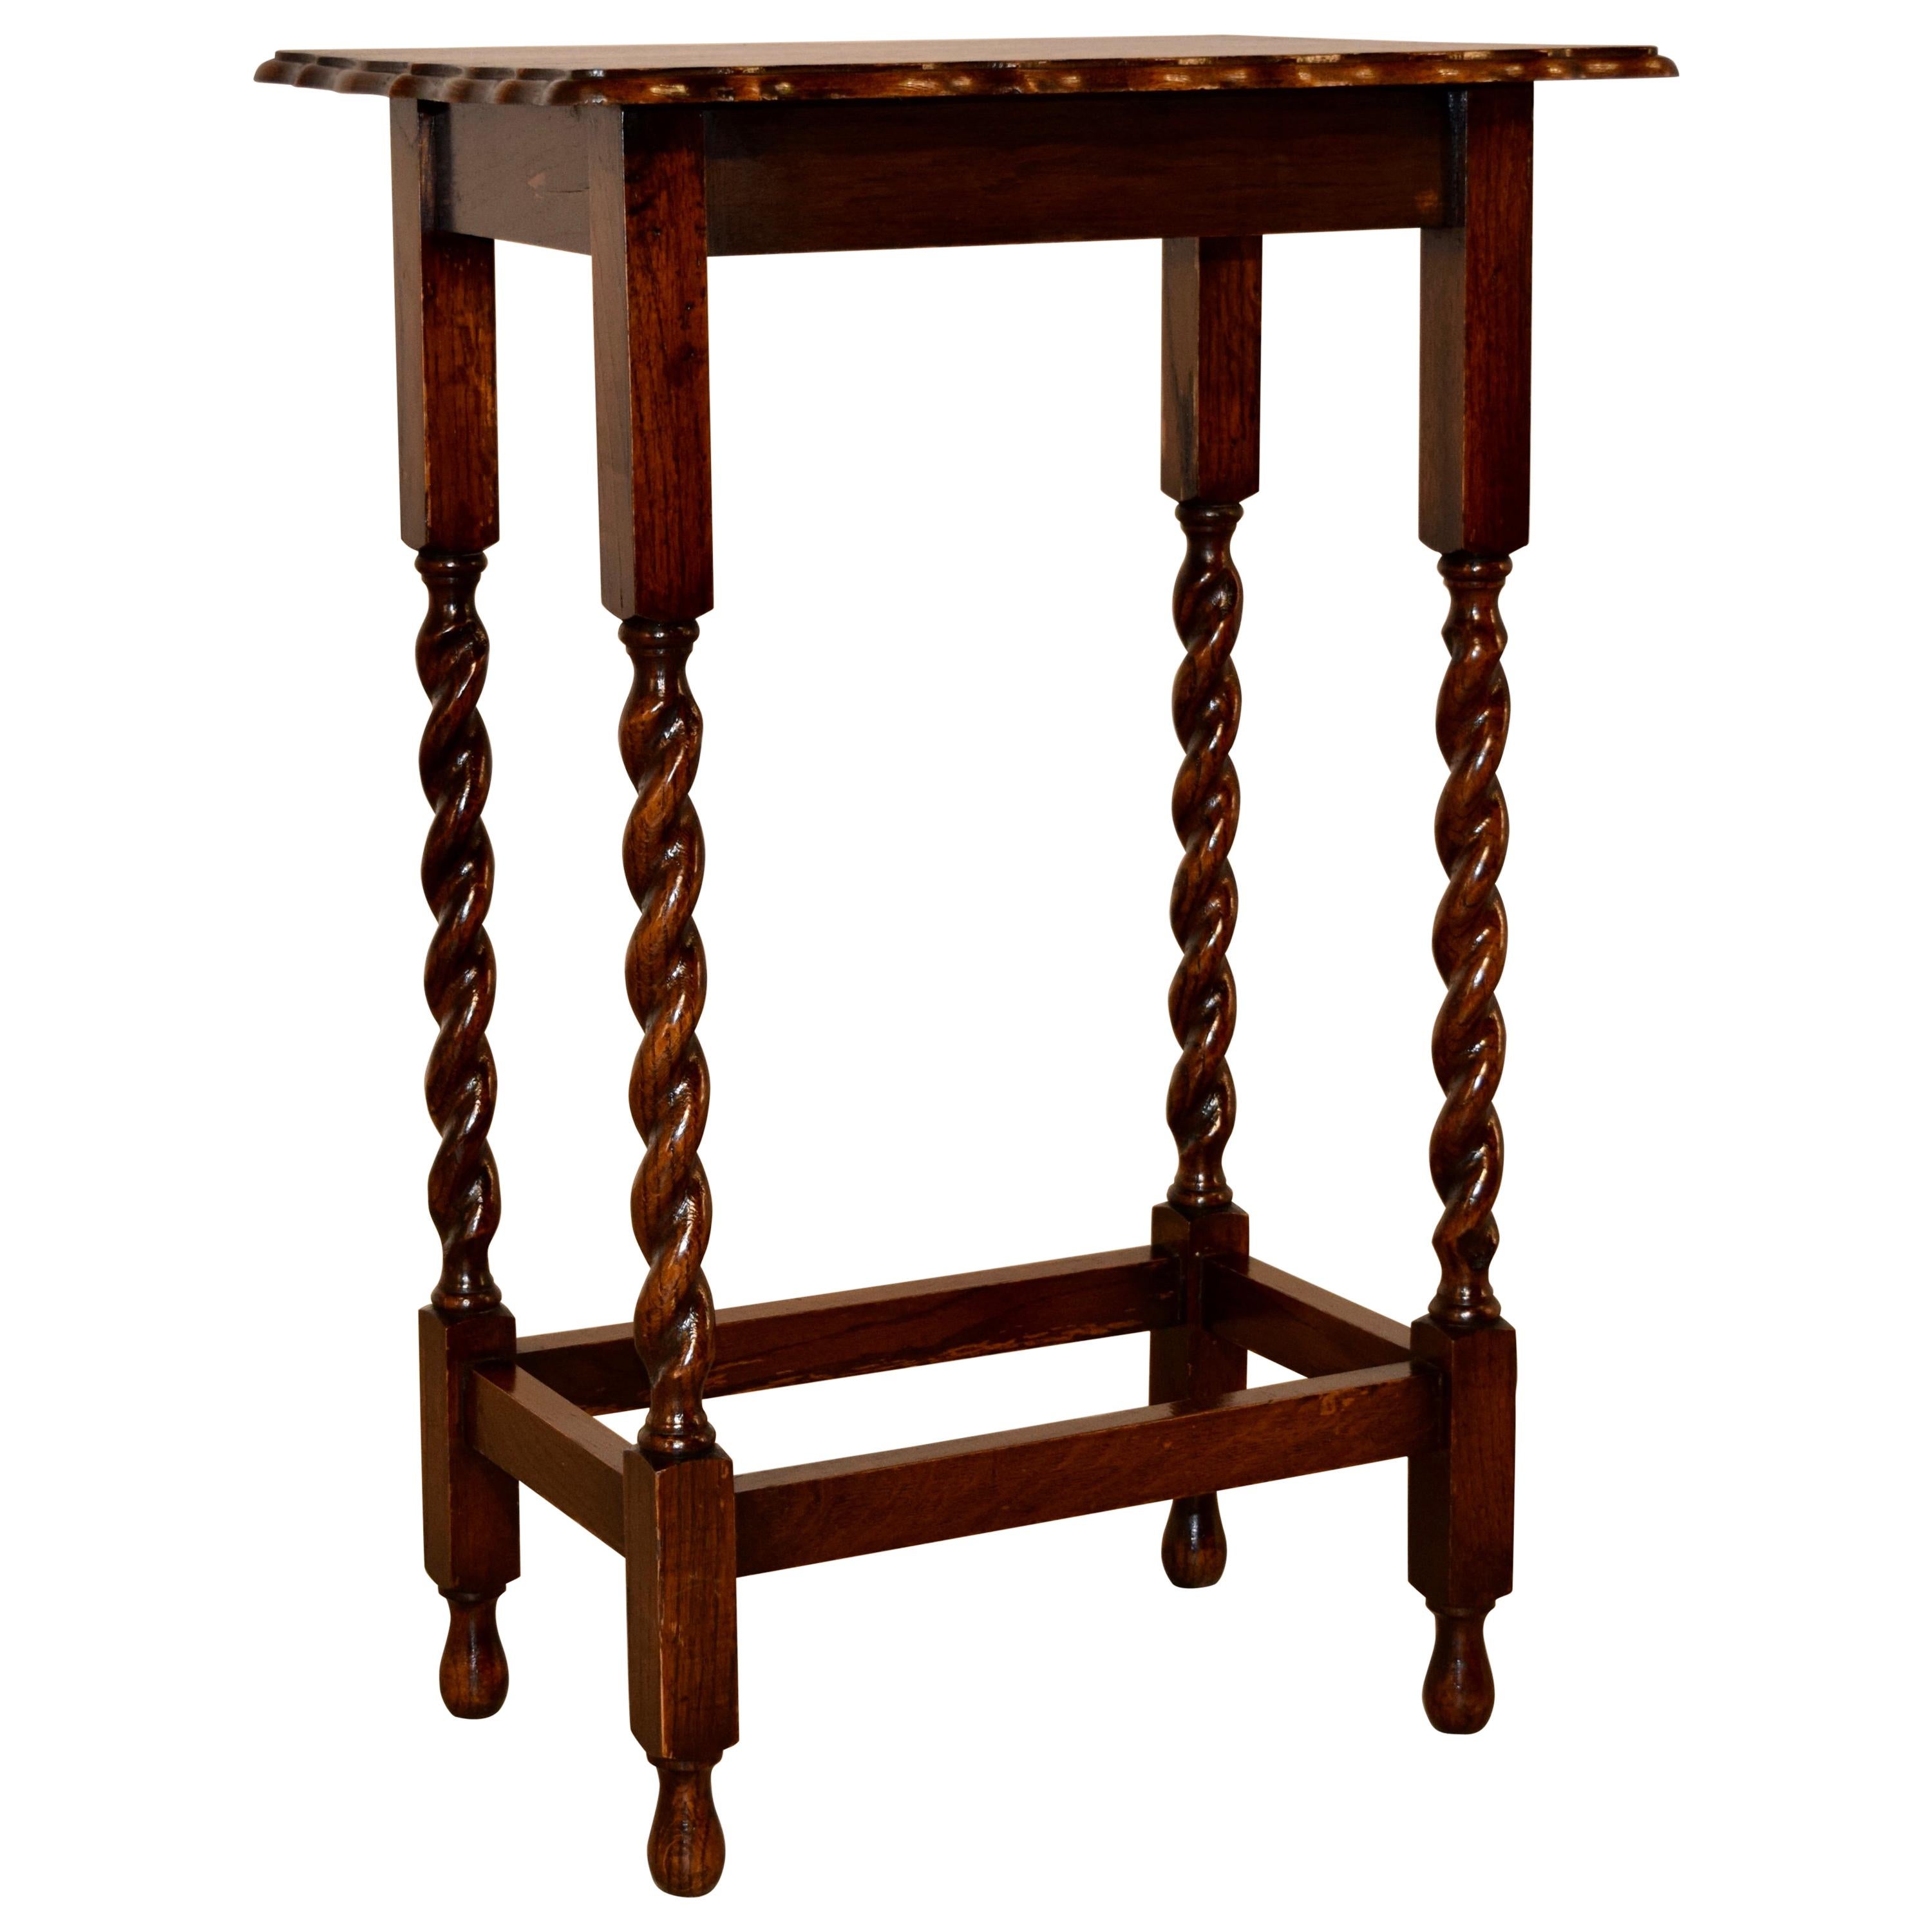 English Oak Side Table, circa 1900